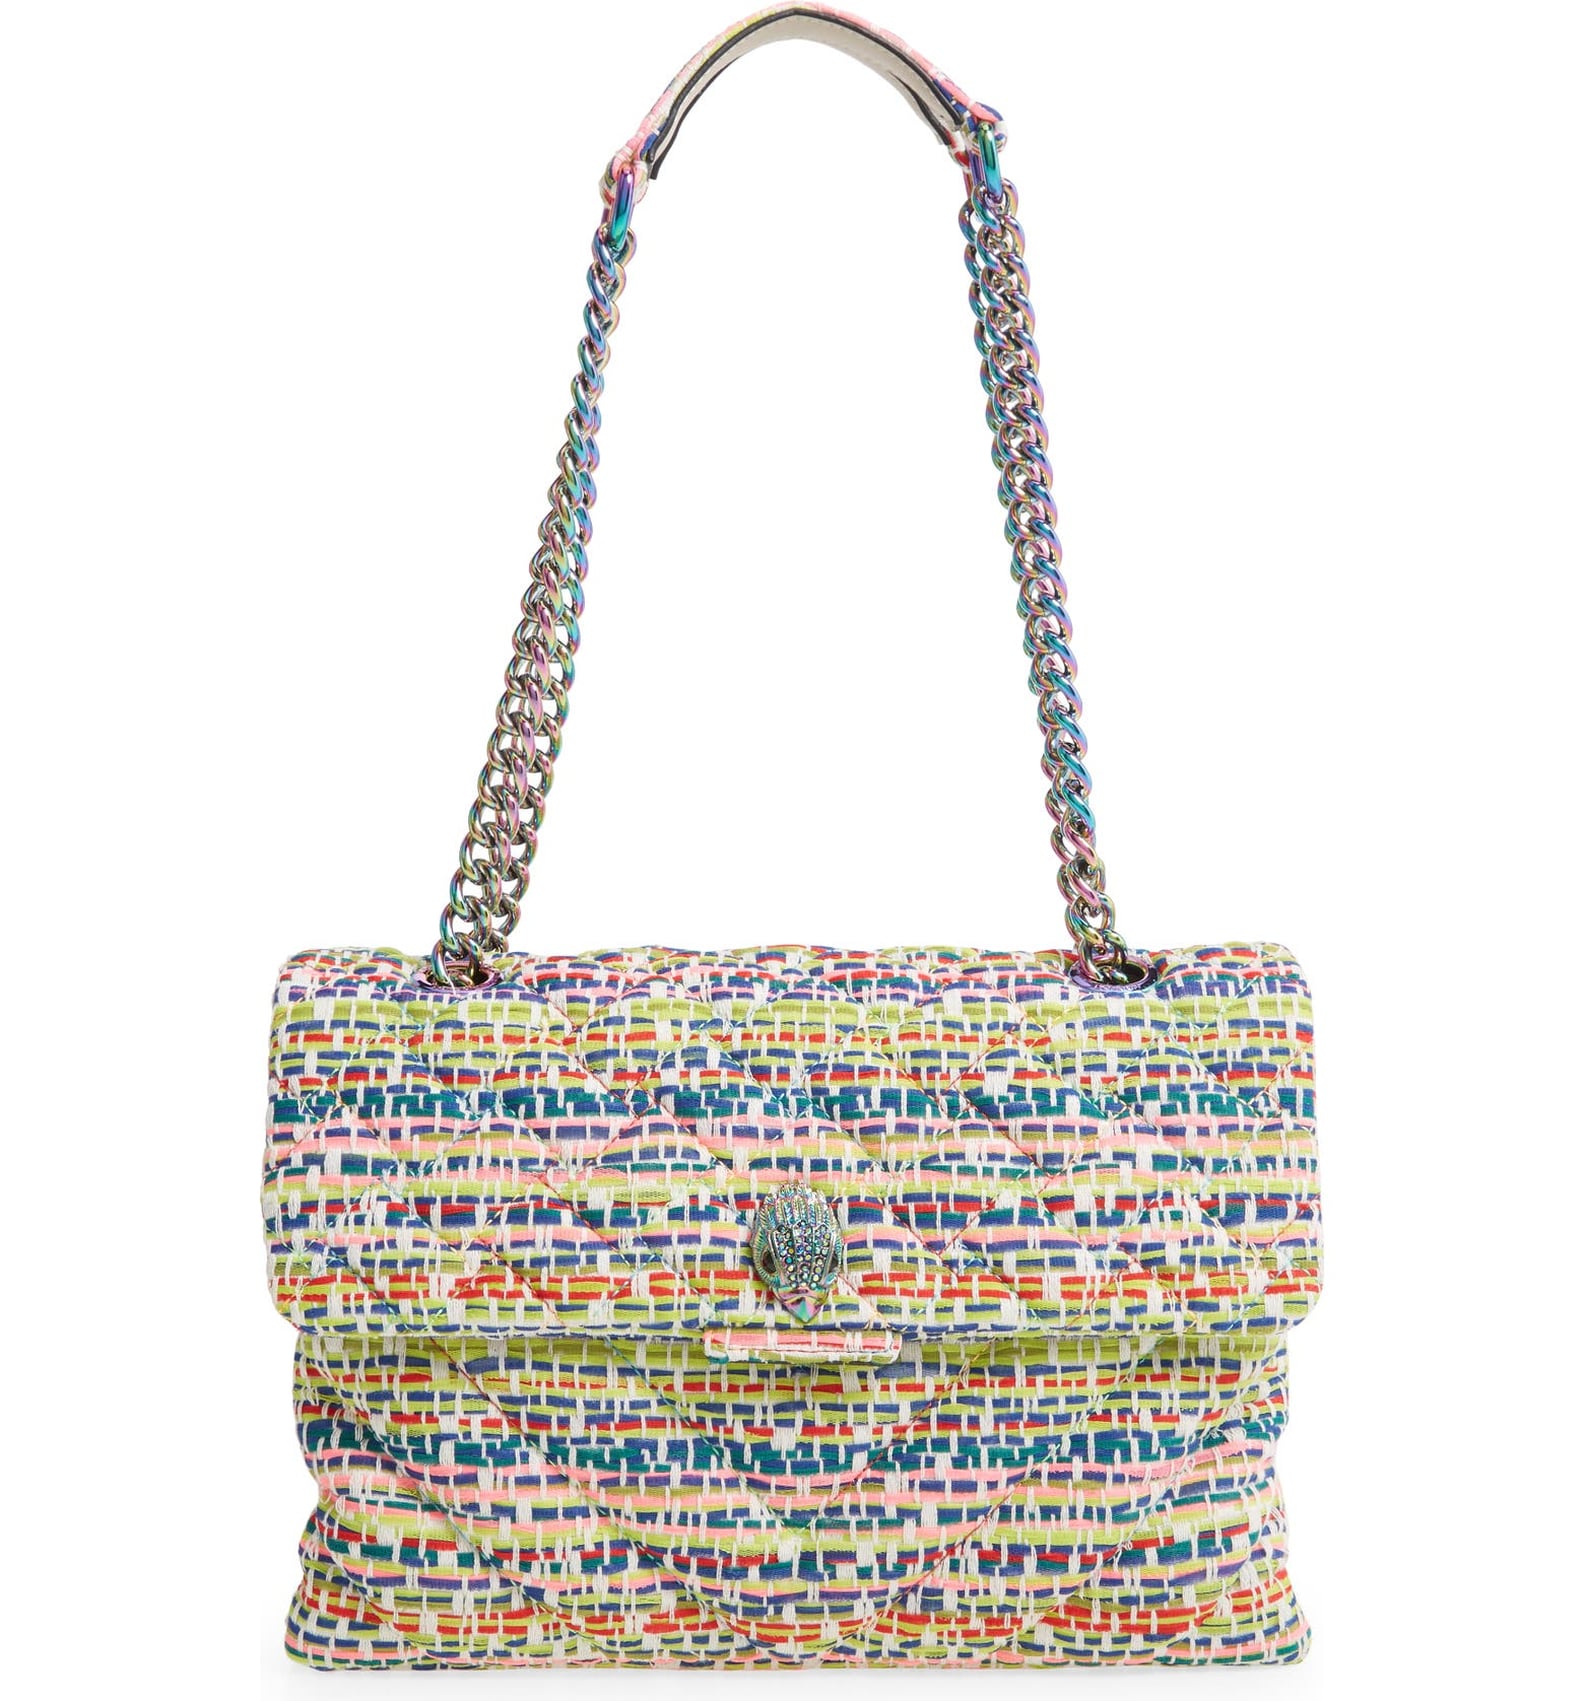 The Best Handbags At the Nordstrom Anniversary Sale 2021 | POPSUGAR Fashion